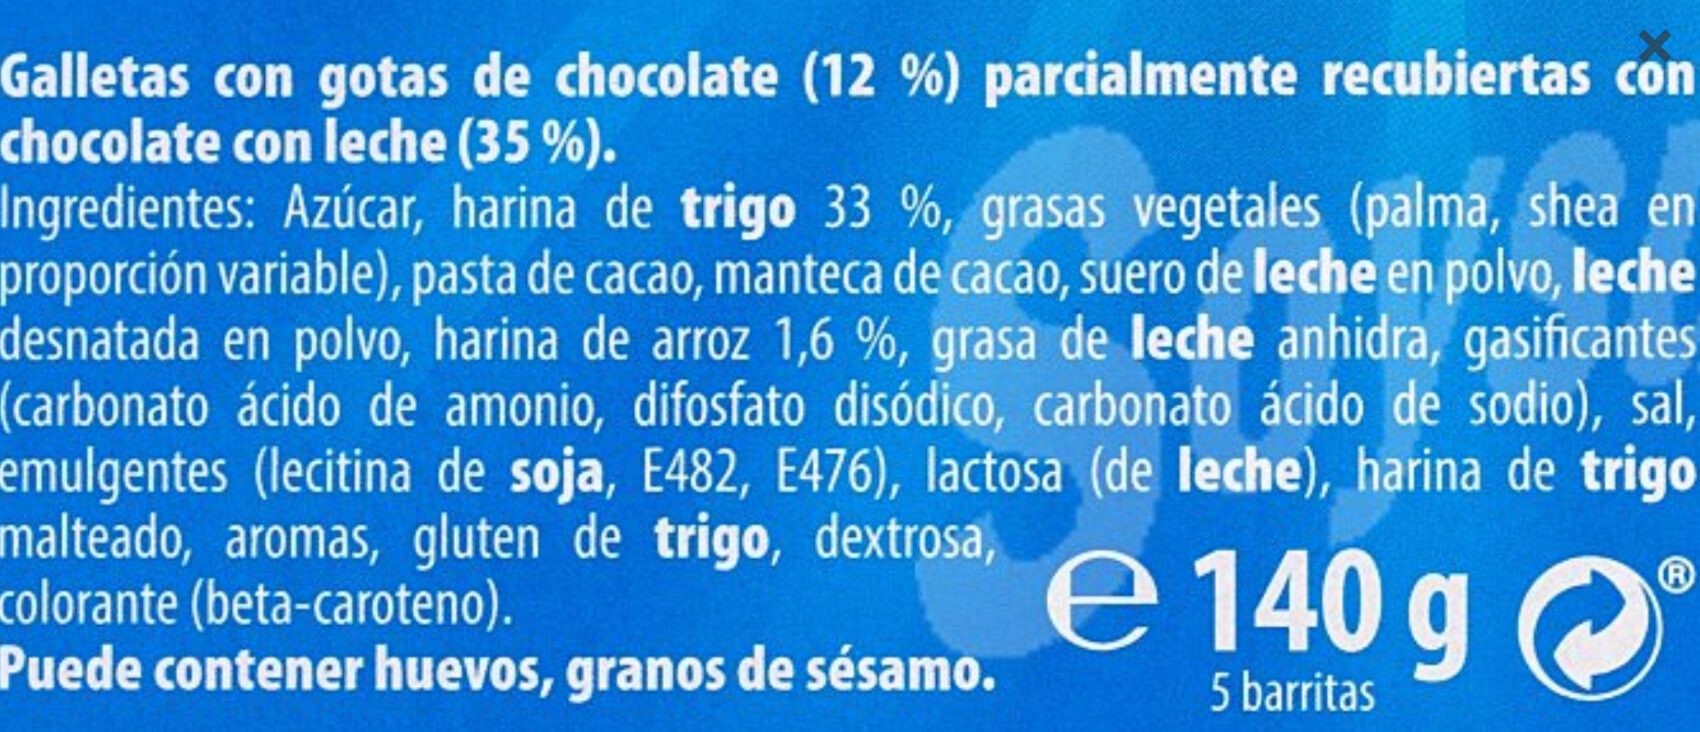 Barritas Chips de chocolate - Ingredients - es